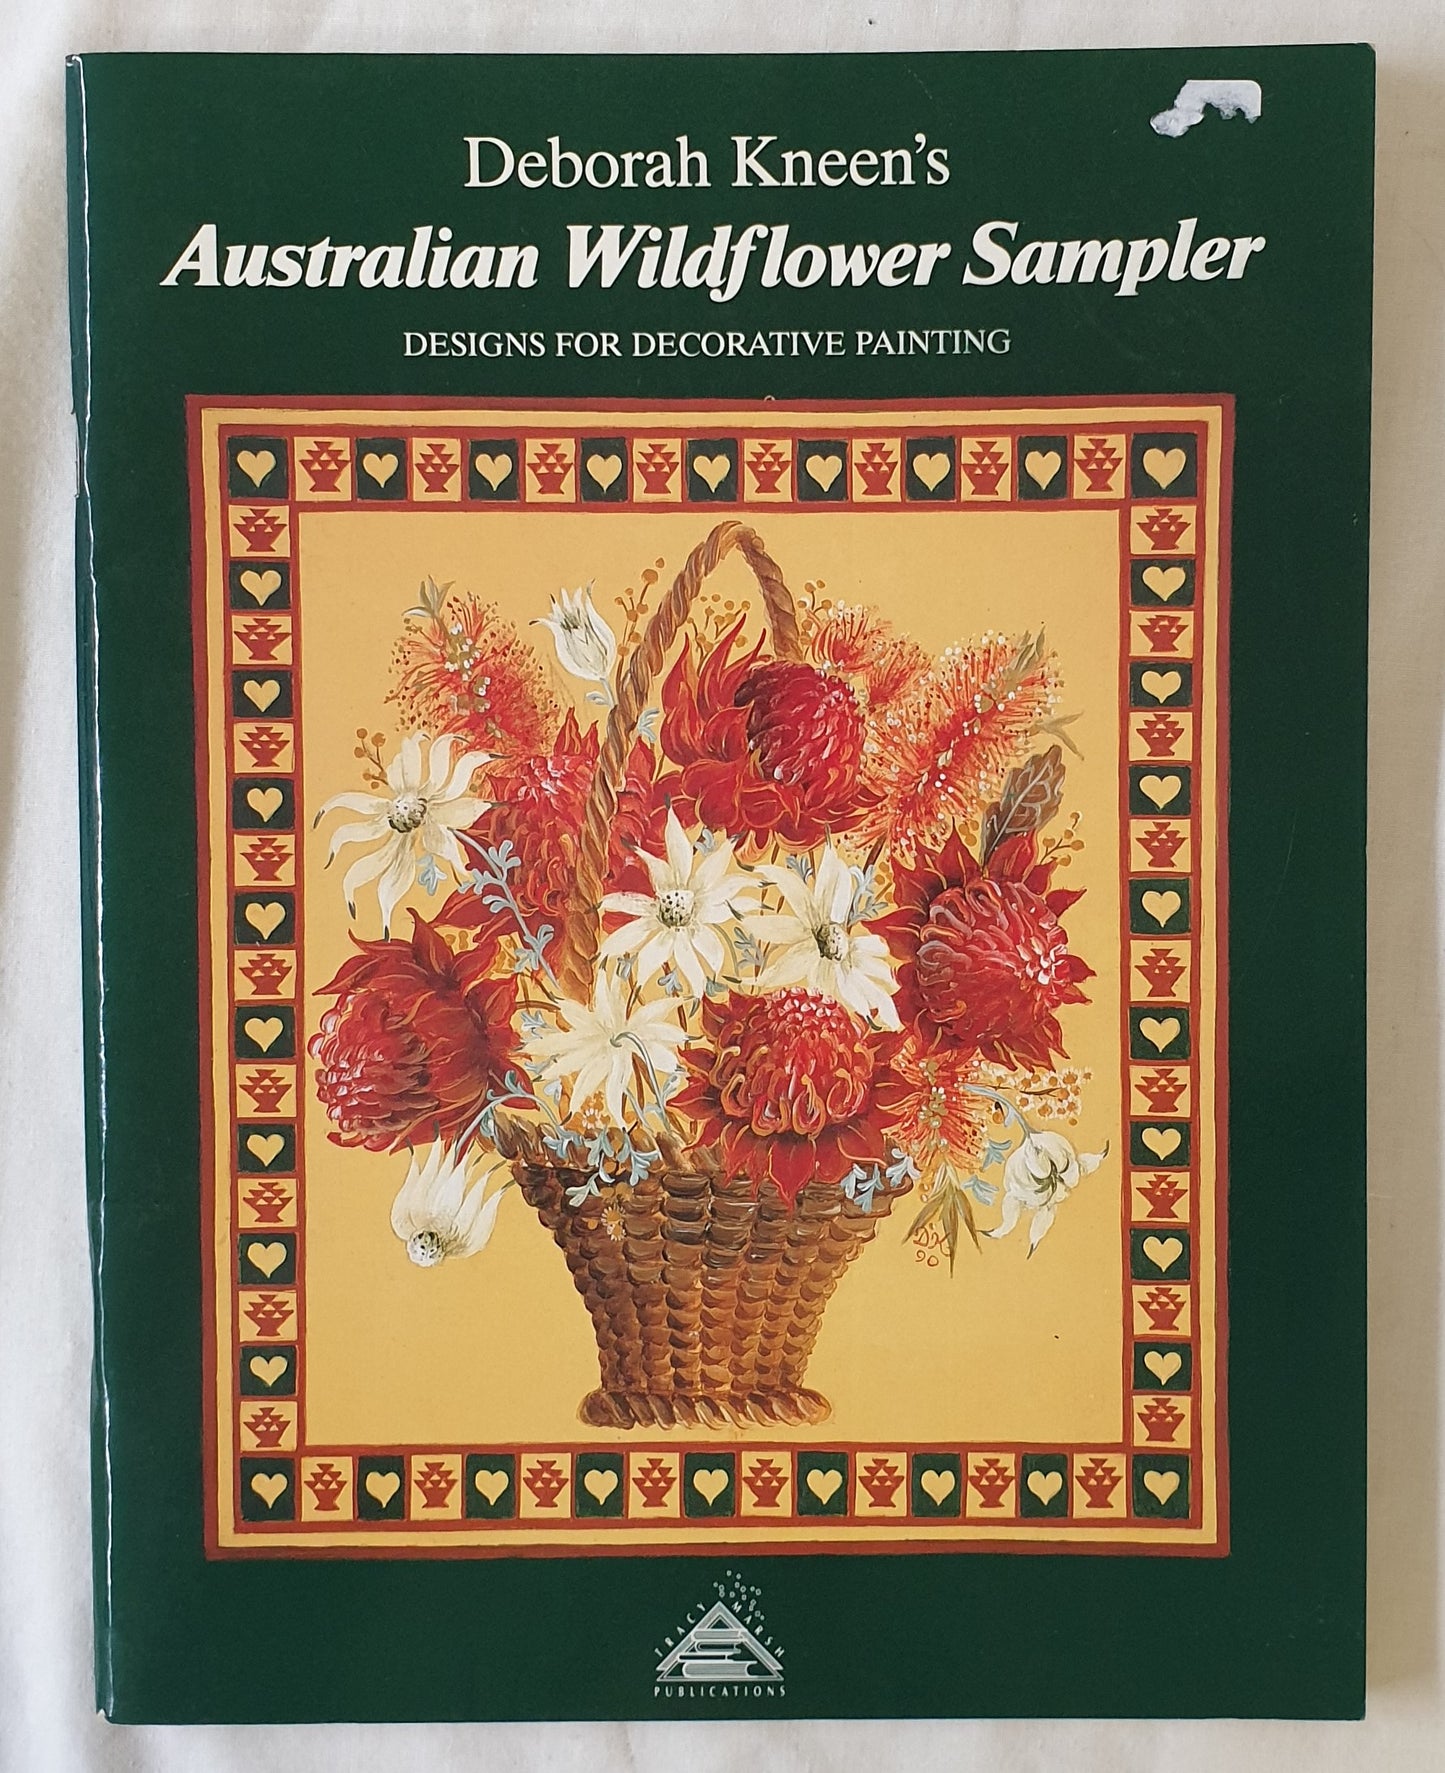 Deborah Kneen’s Australian Wildflower Sampler  Designs for Decorative Painting  by Deborah Kneen